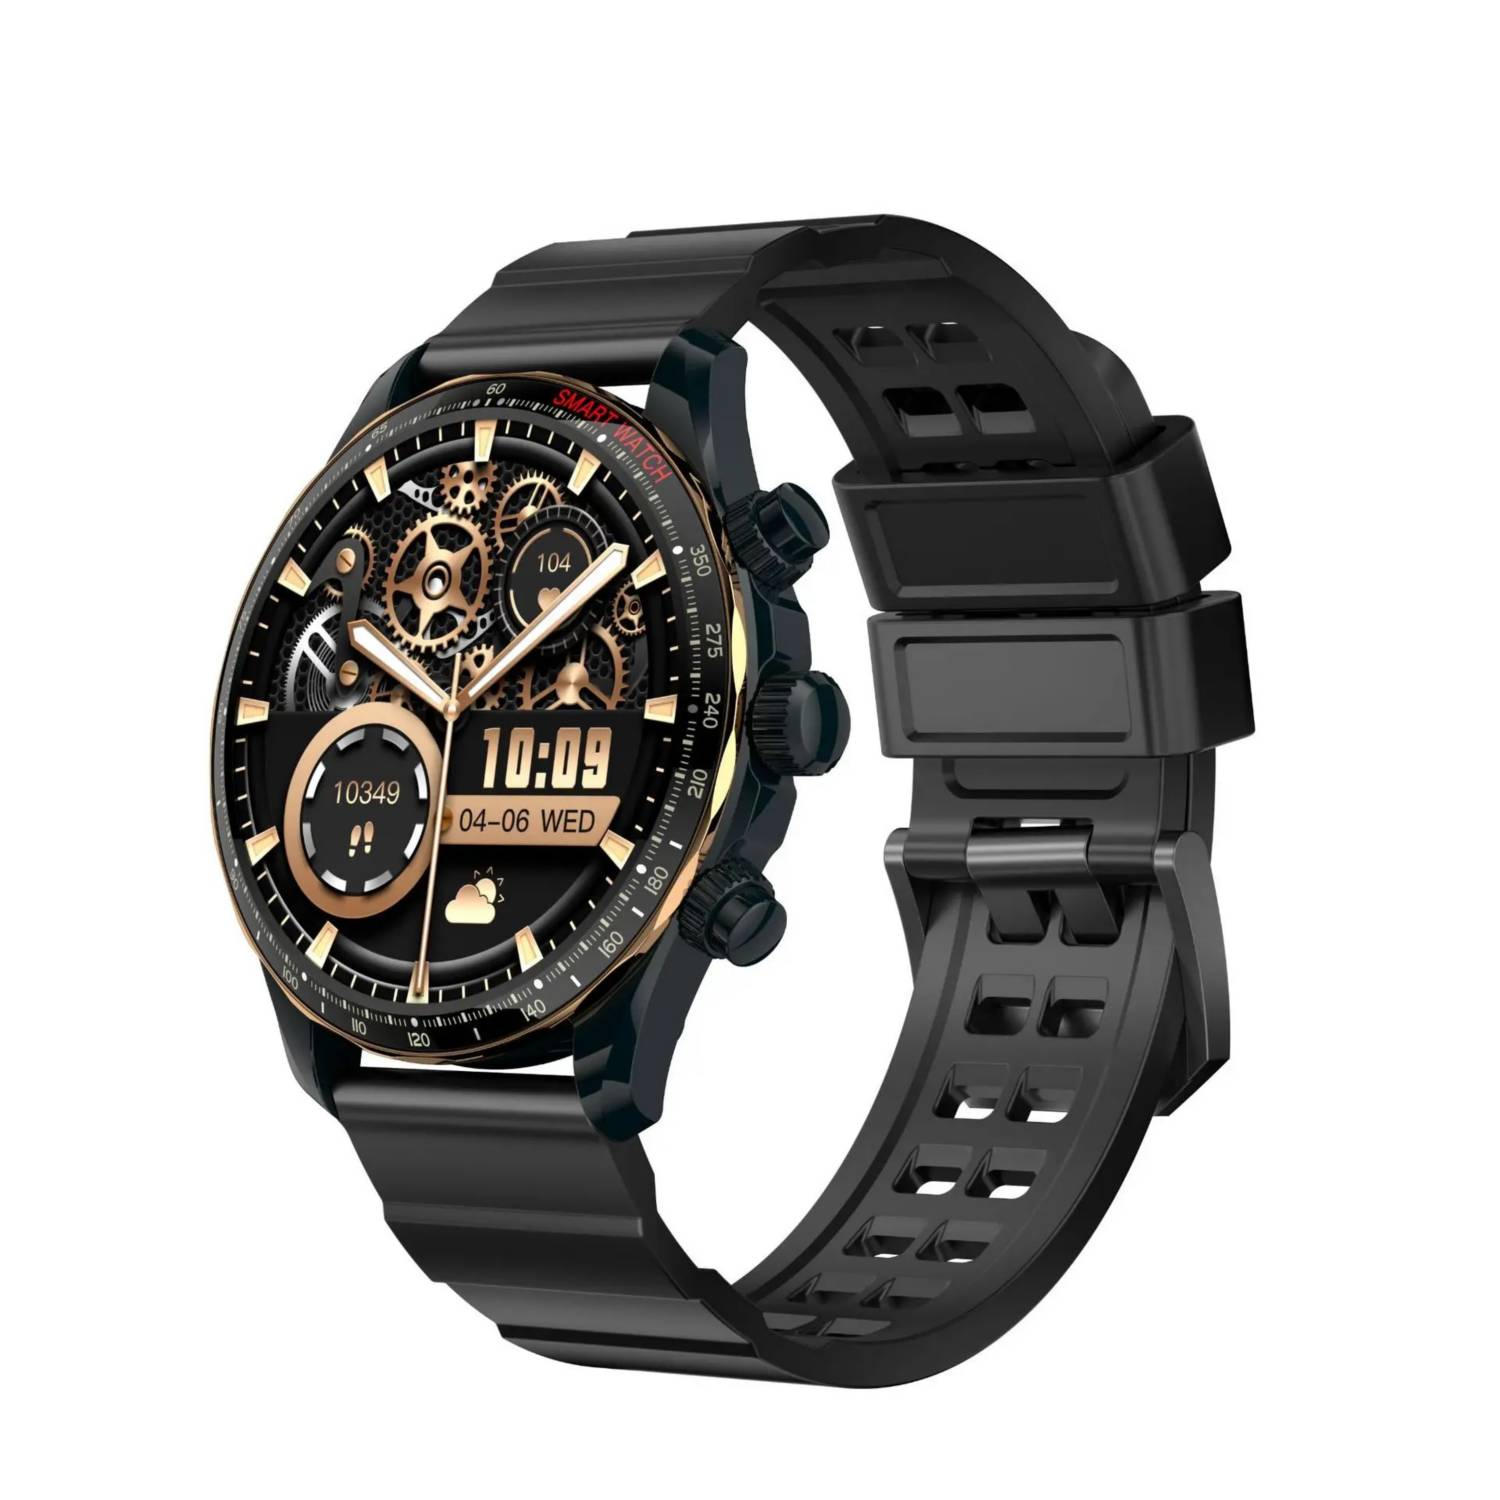 Pgd446 reloj inteligente 1.28 pulgadas bluetooth reloj deportivo GENERAC